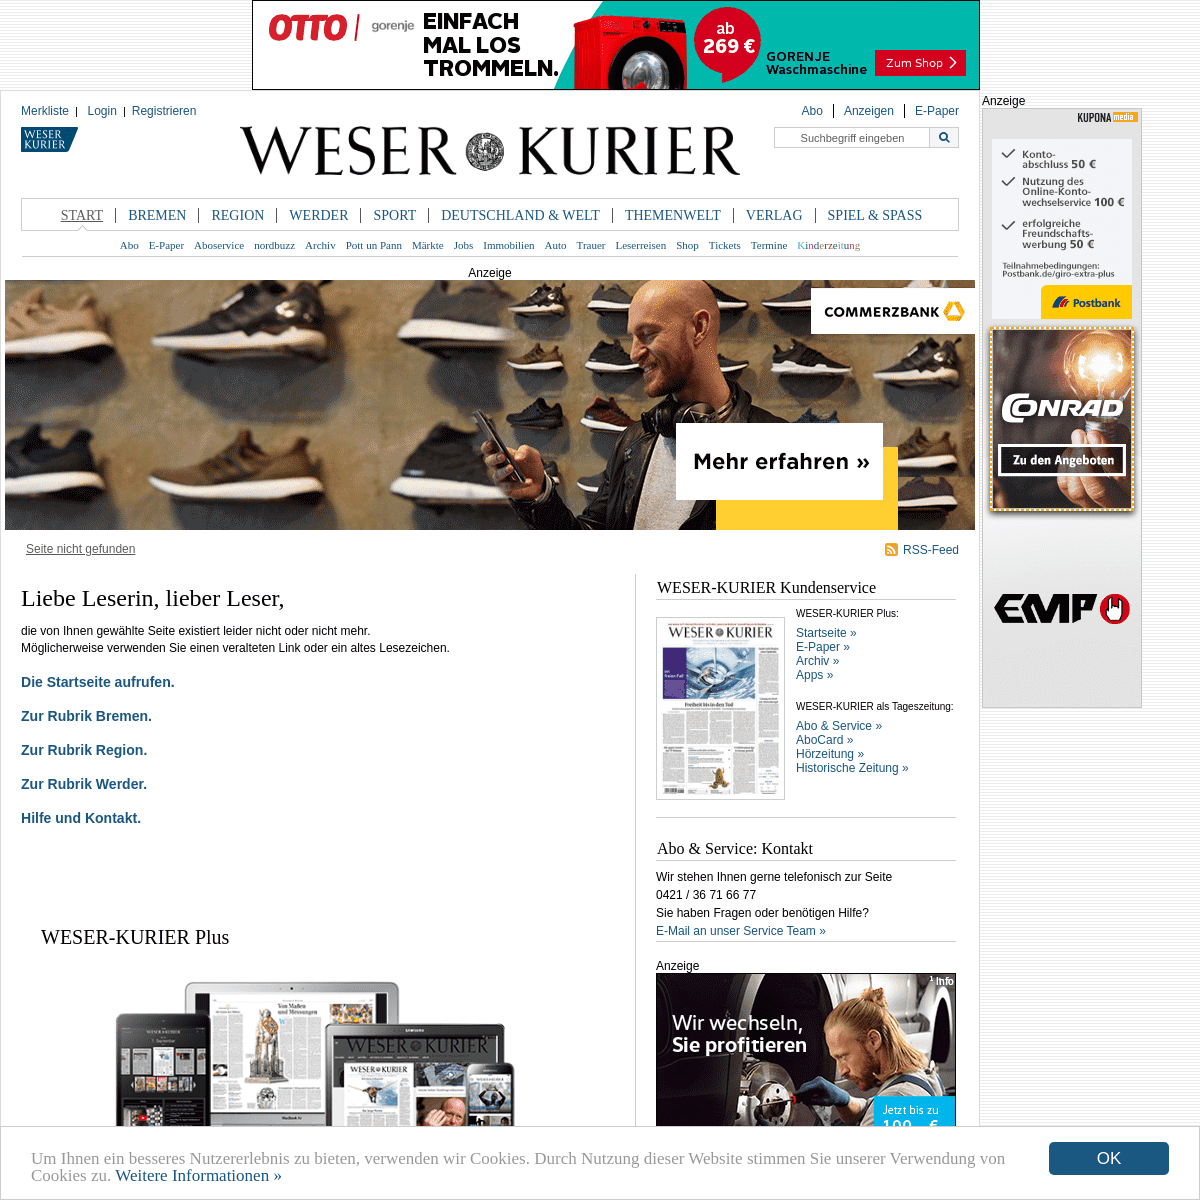 A complete backup of www.weser-kurier.de/startseite_artikel